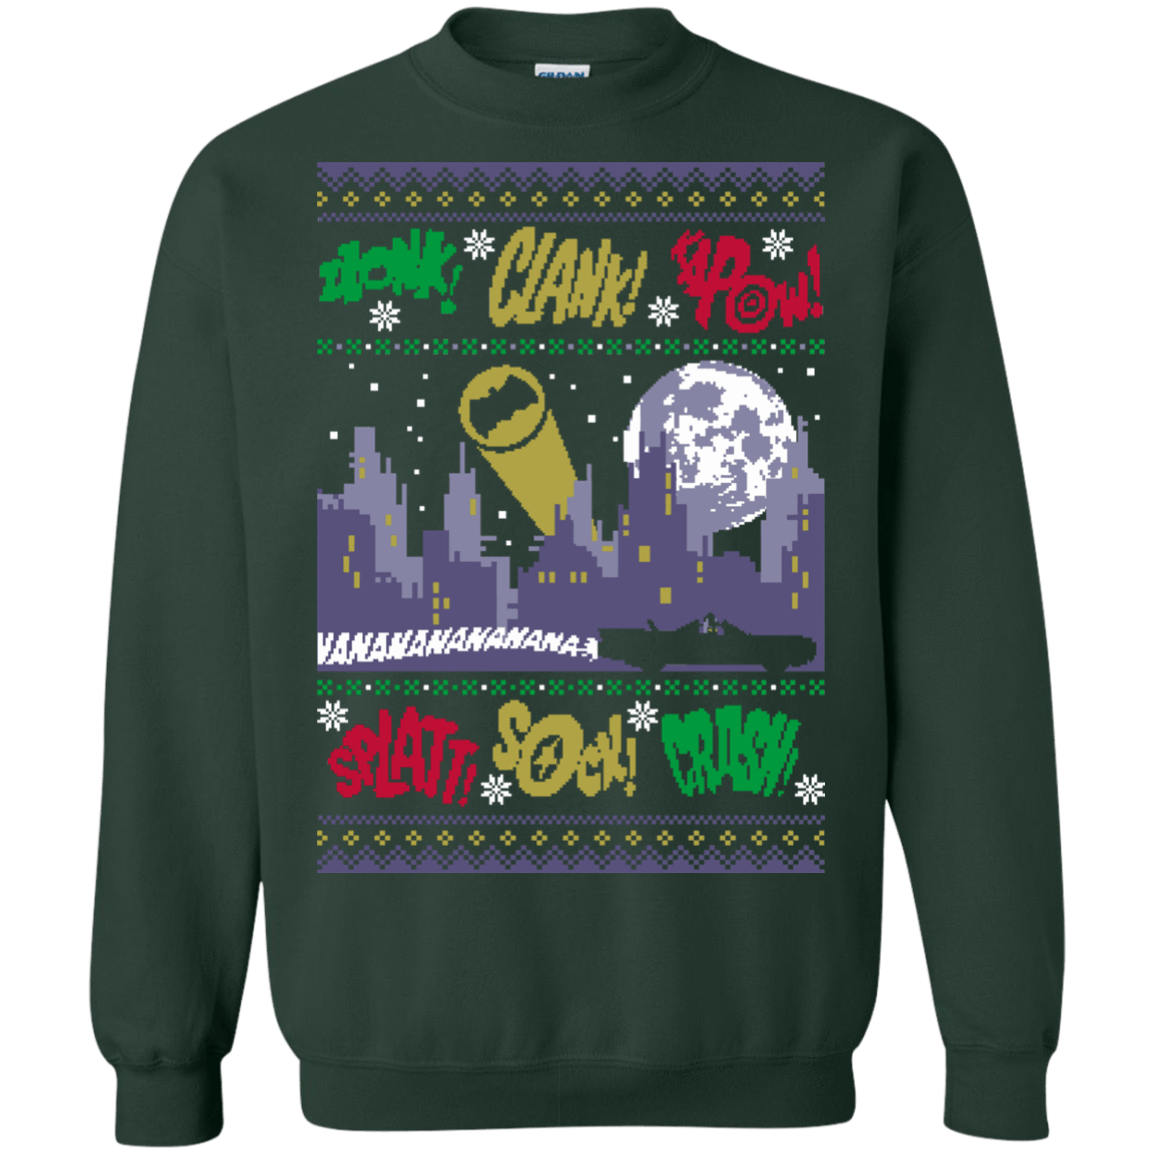 Sweatshirts Forest Green / Small UGLY BATMAN Crewneck Sweatshirt